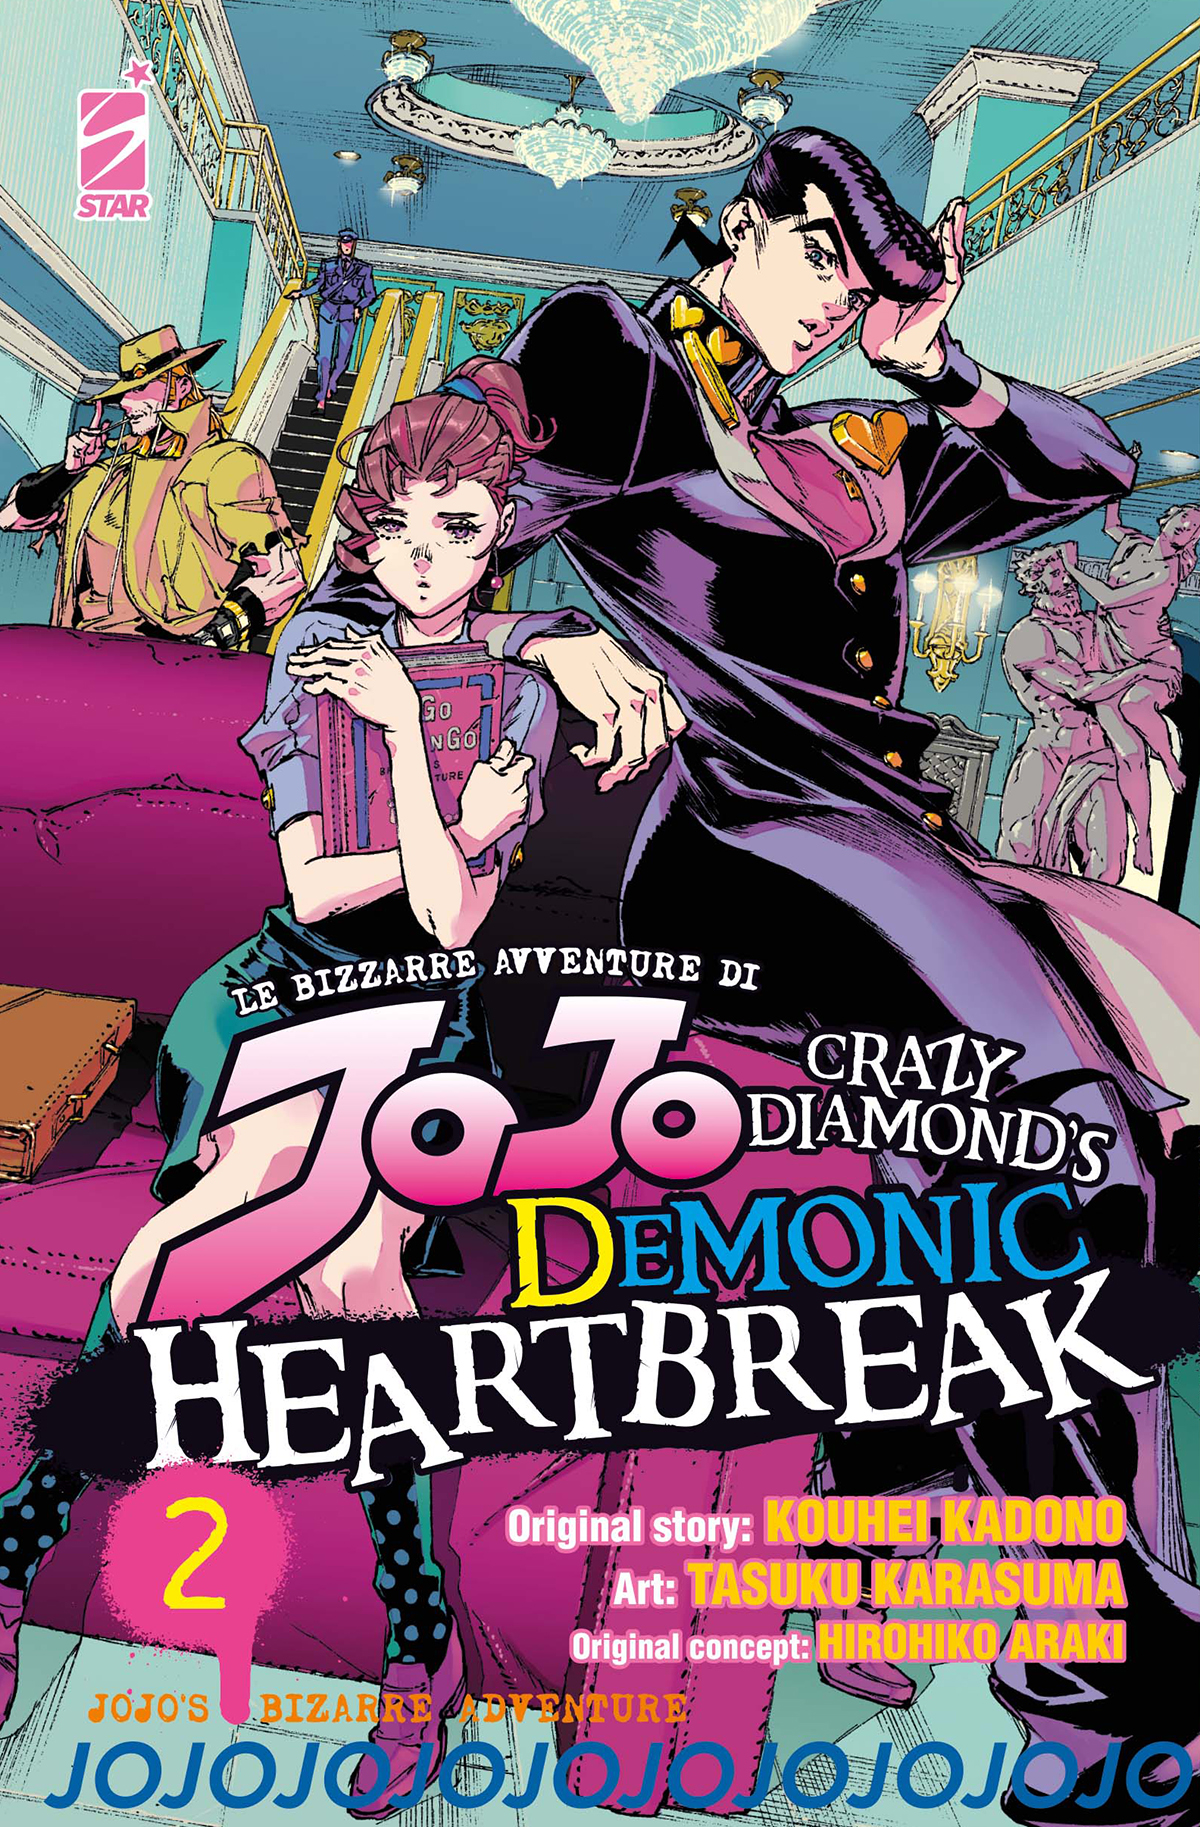 ACTION #354 JOJO CRAZY DIAMOND'S DEMONIC HEARTBREAK N.02